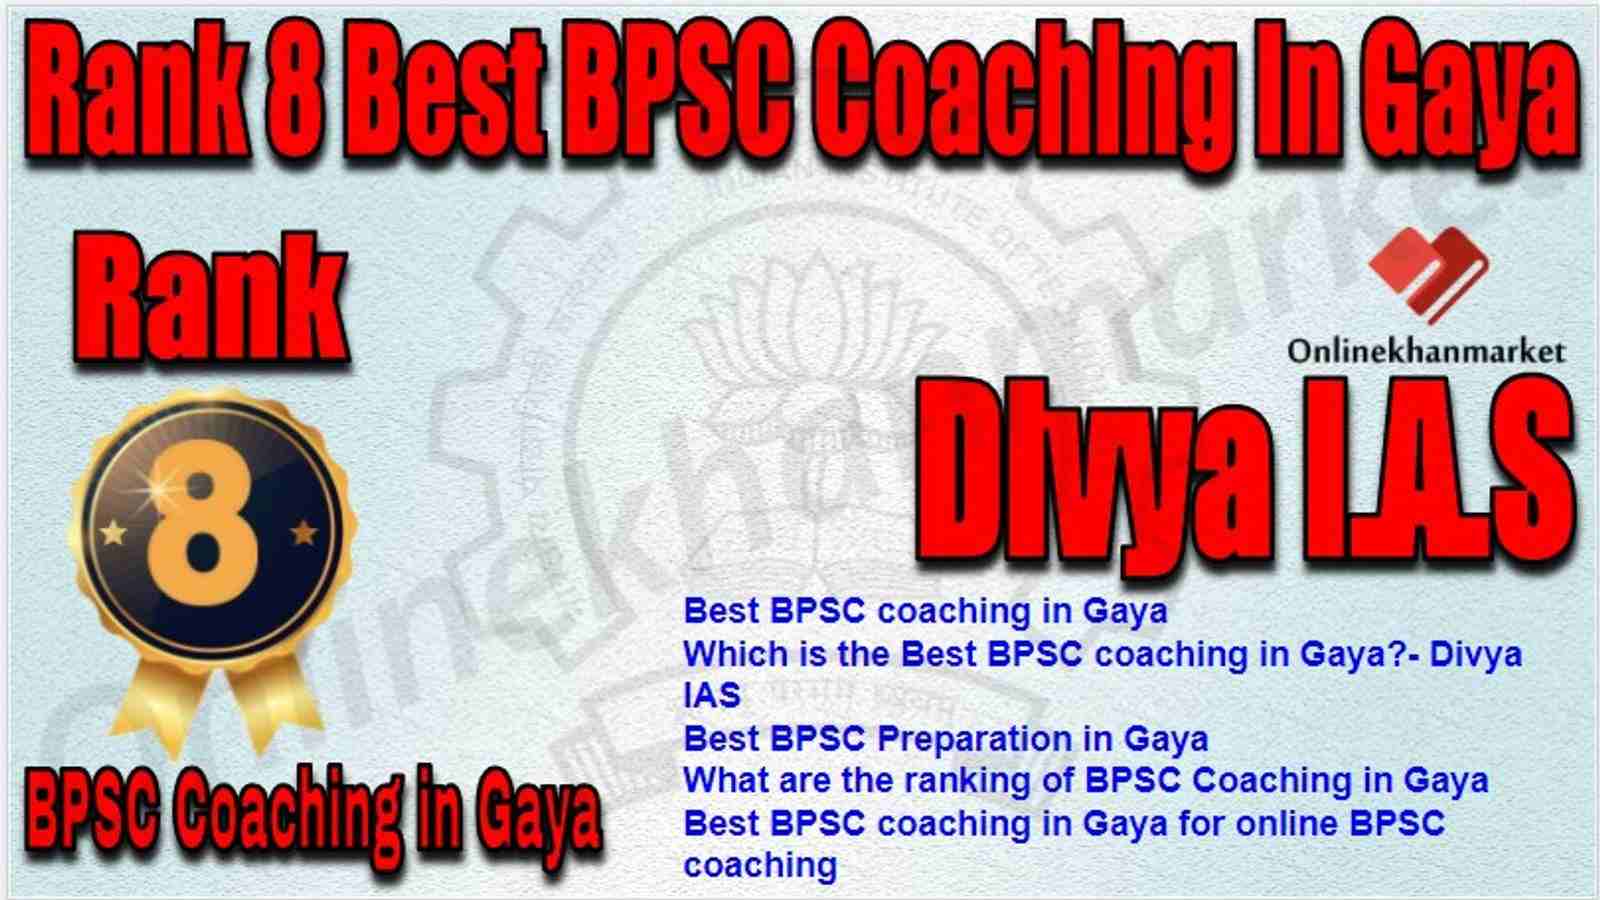 Rank 8 Best BPSC Coaching in gaya